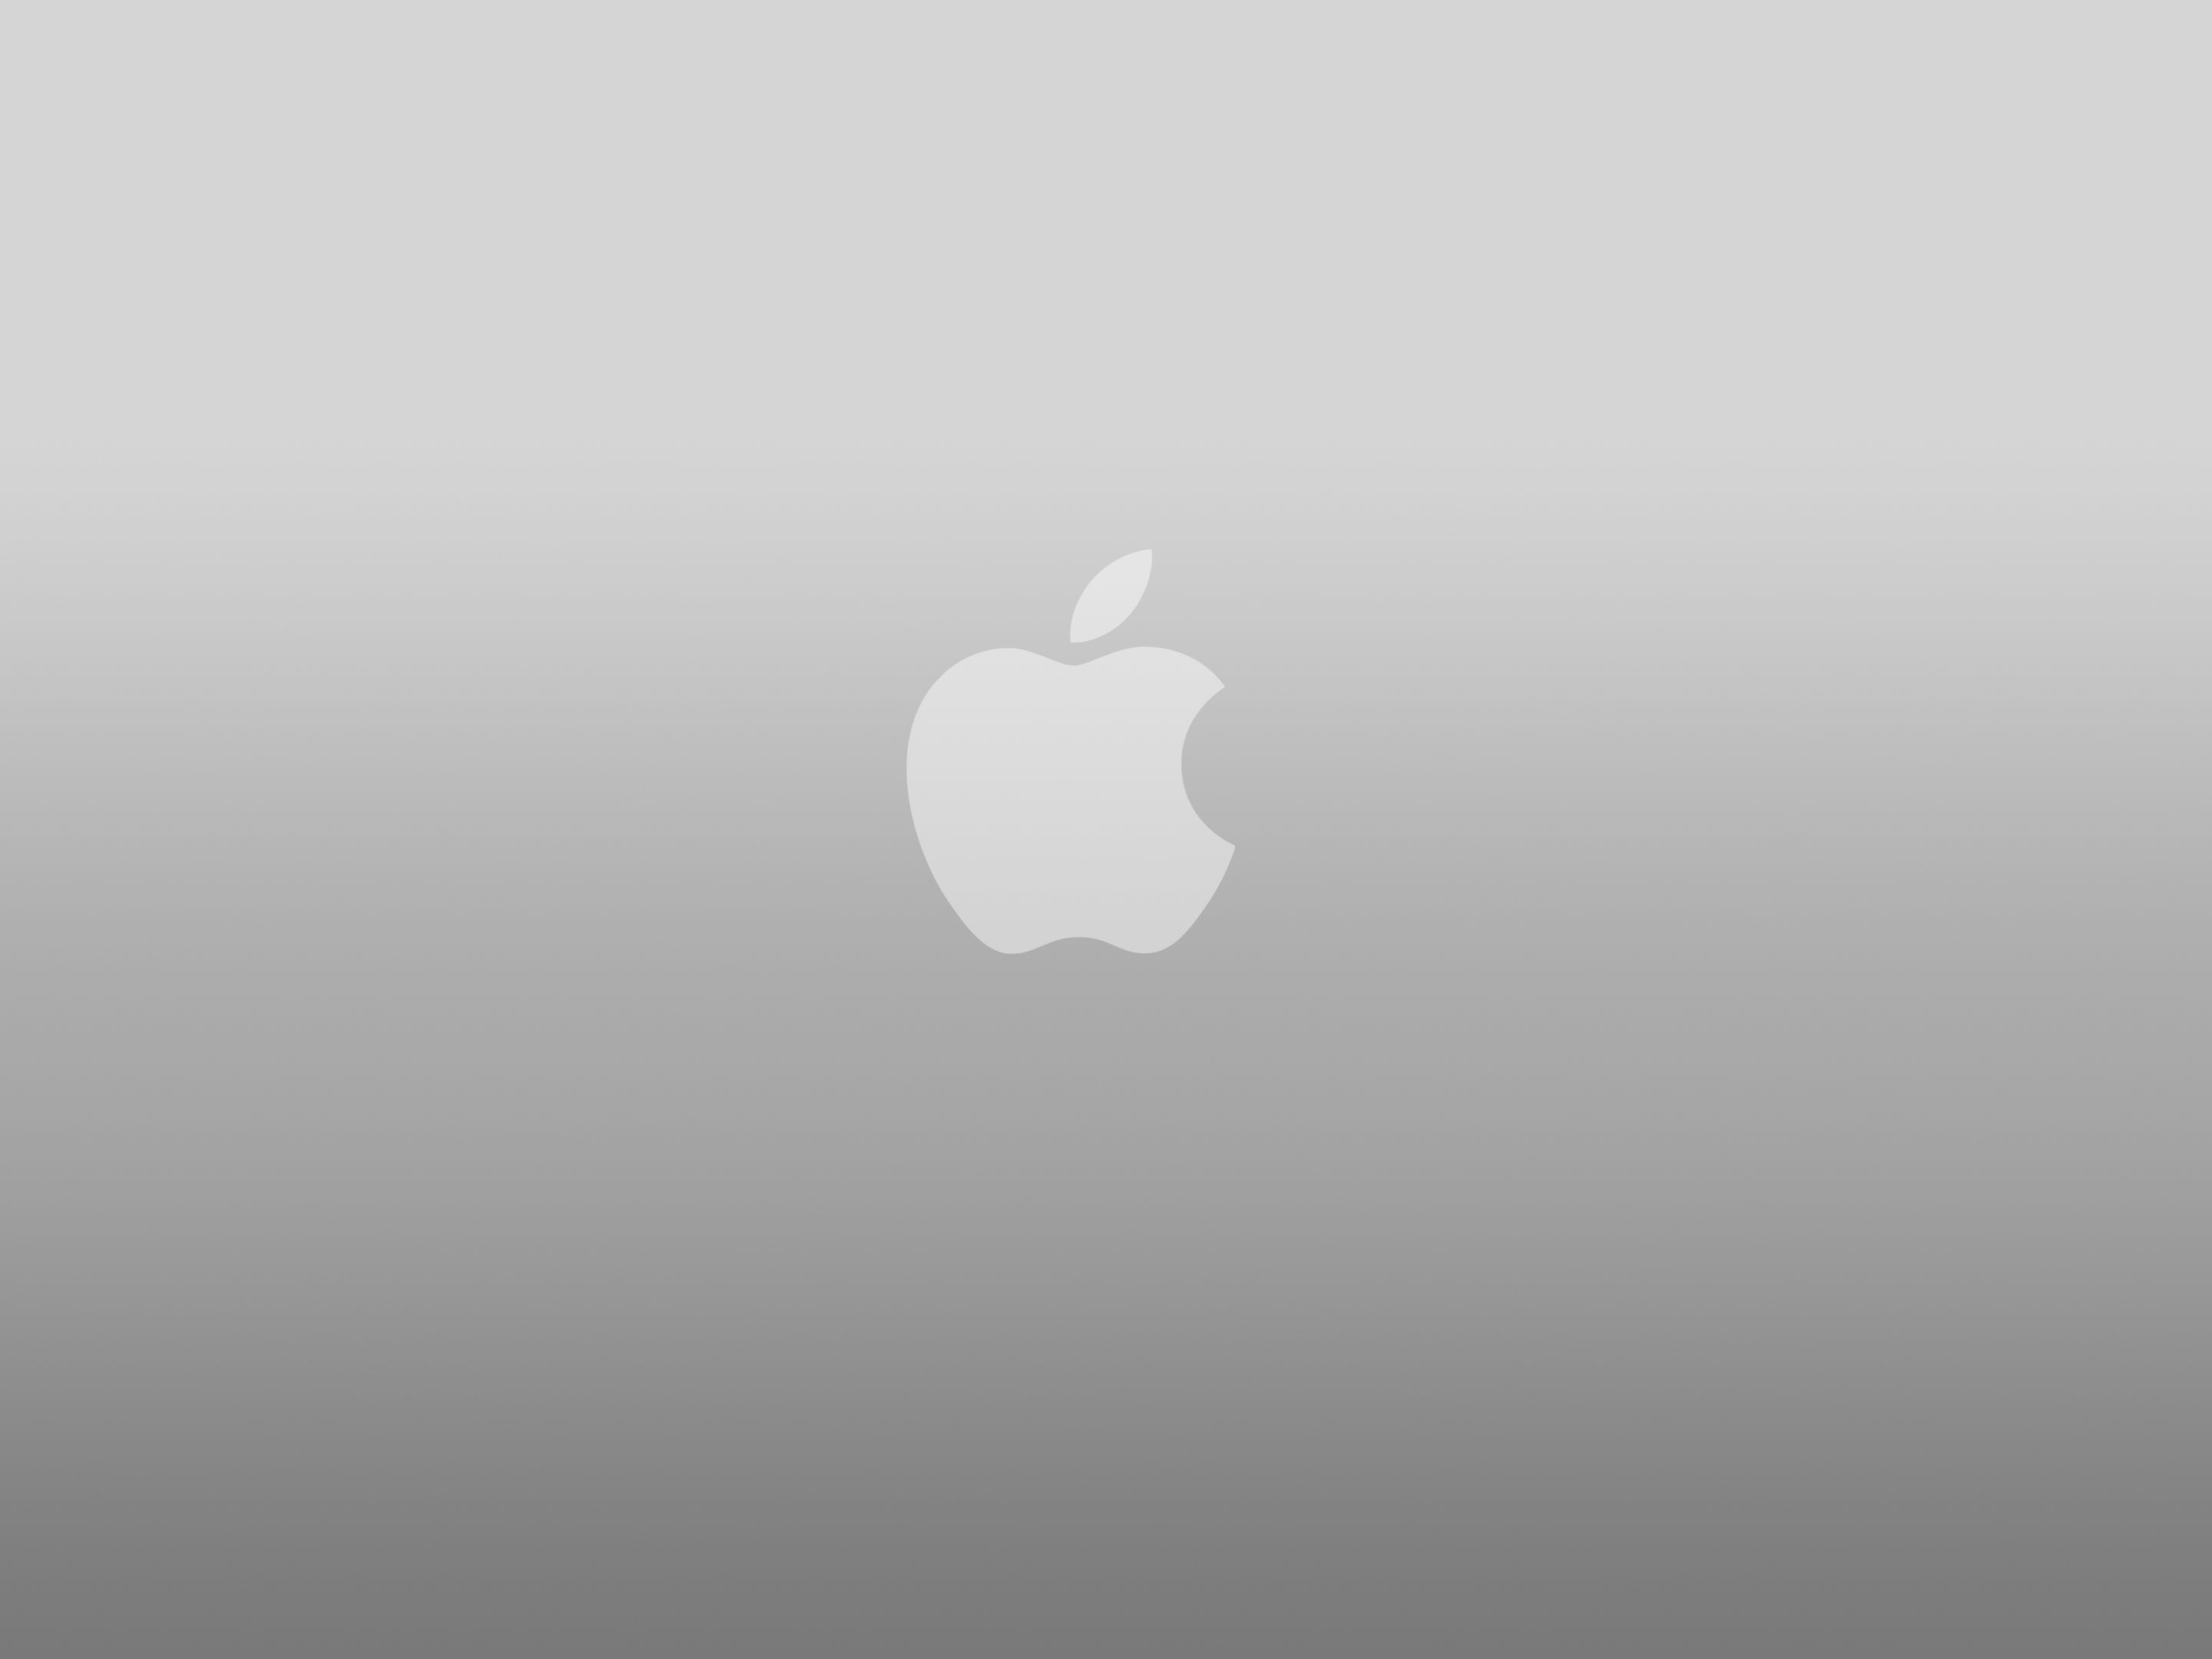 Wallpapers Apple Logo